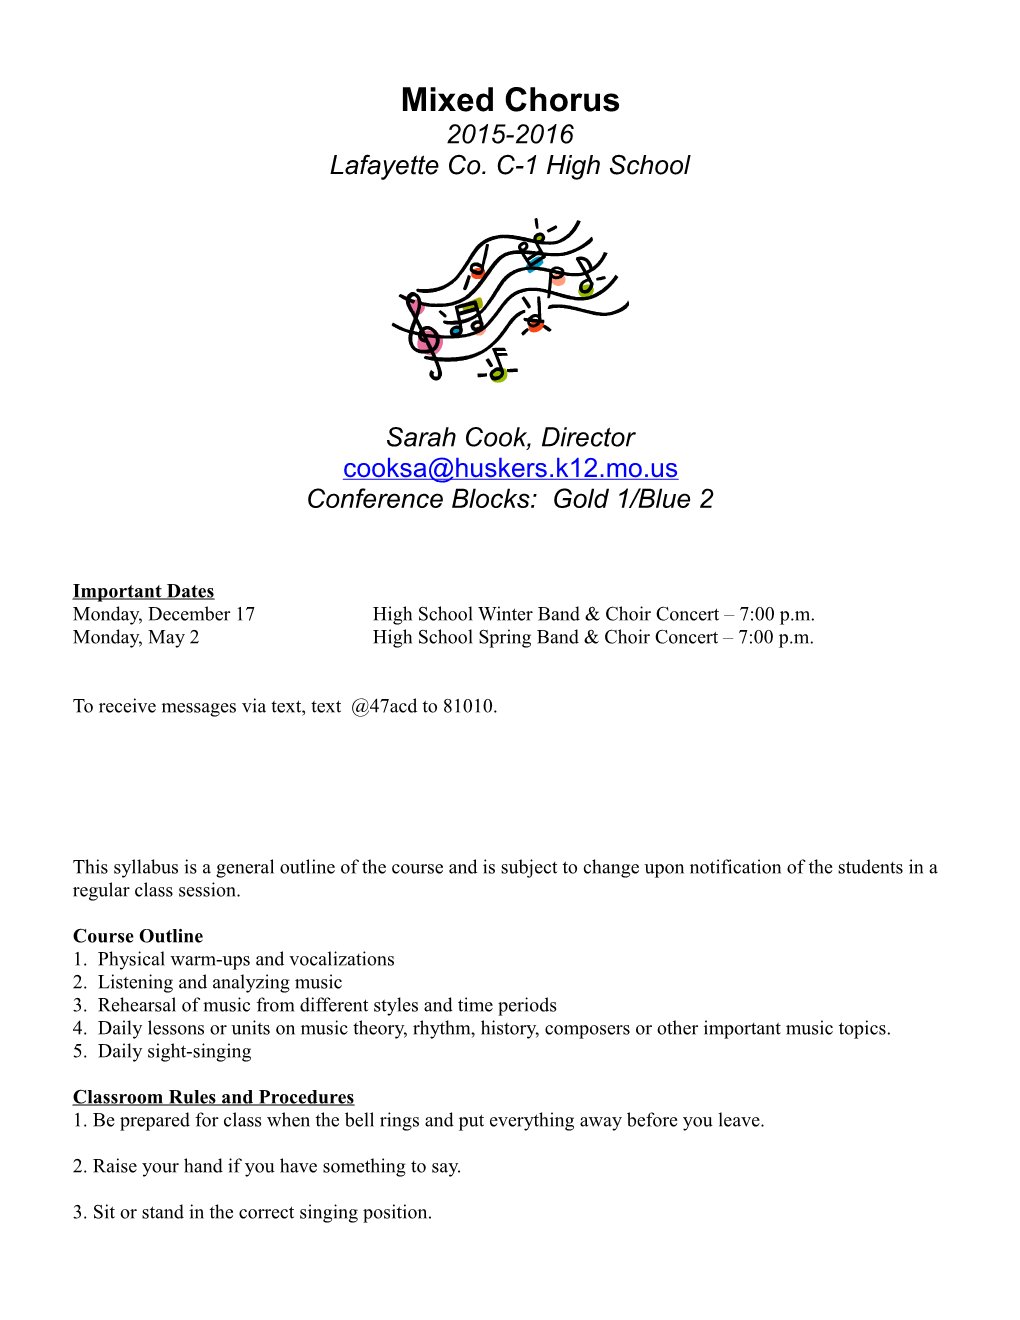 Lafayette Co. C-1 High School